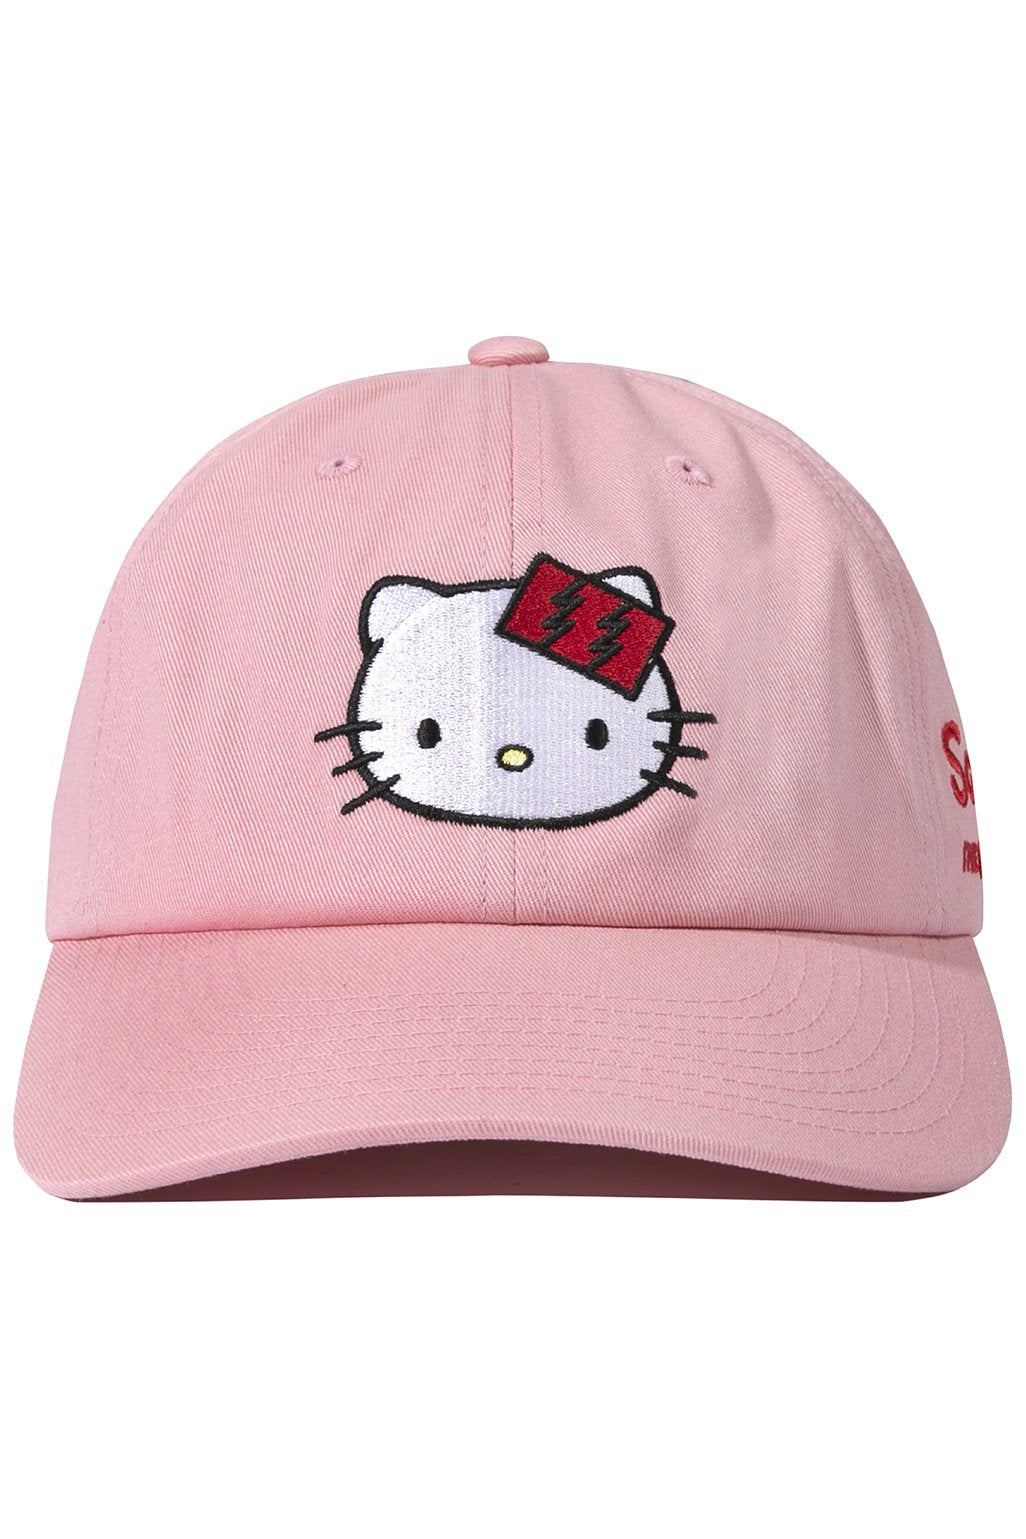 hello kitty converse hat